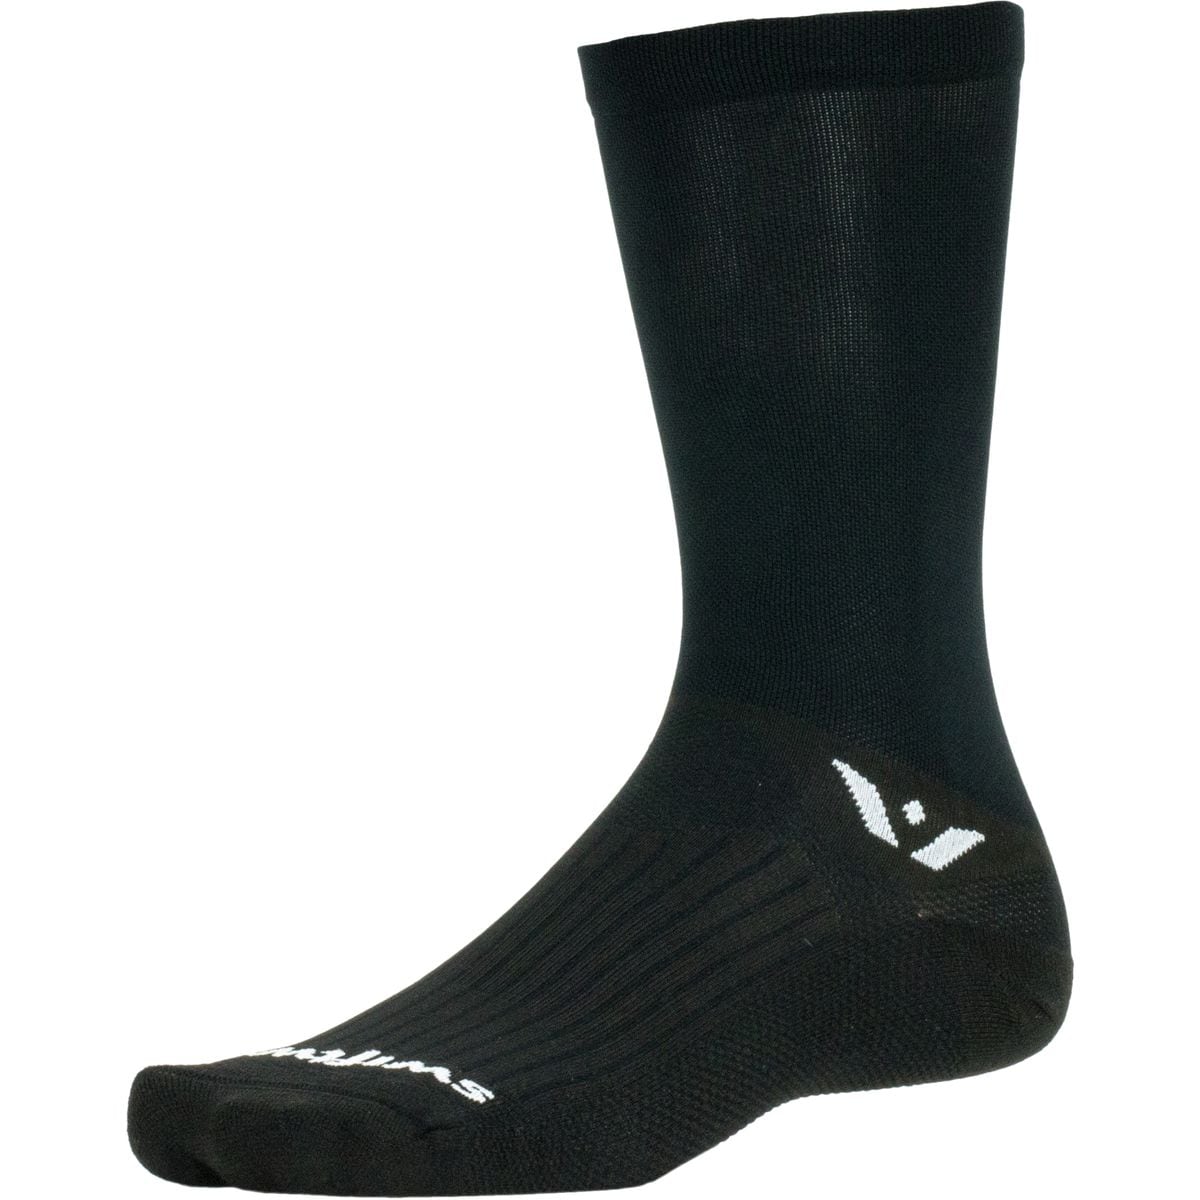 Swiftwick Aspire Seven Socks Men's